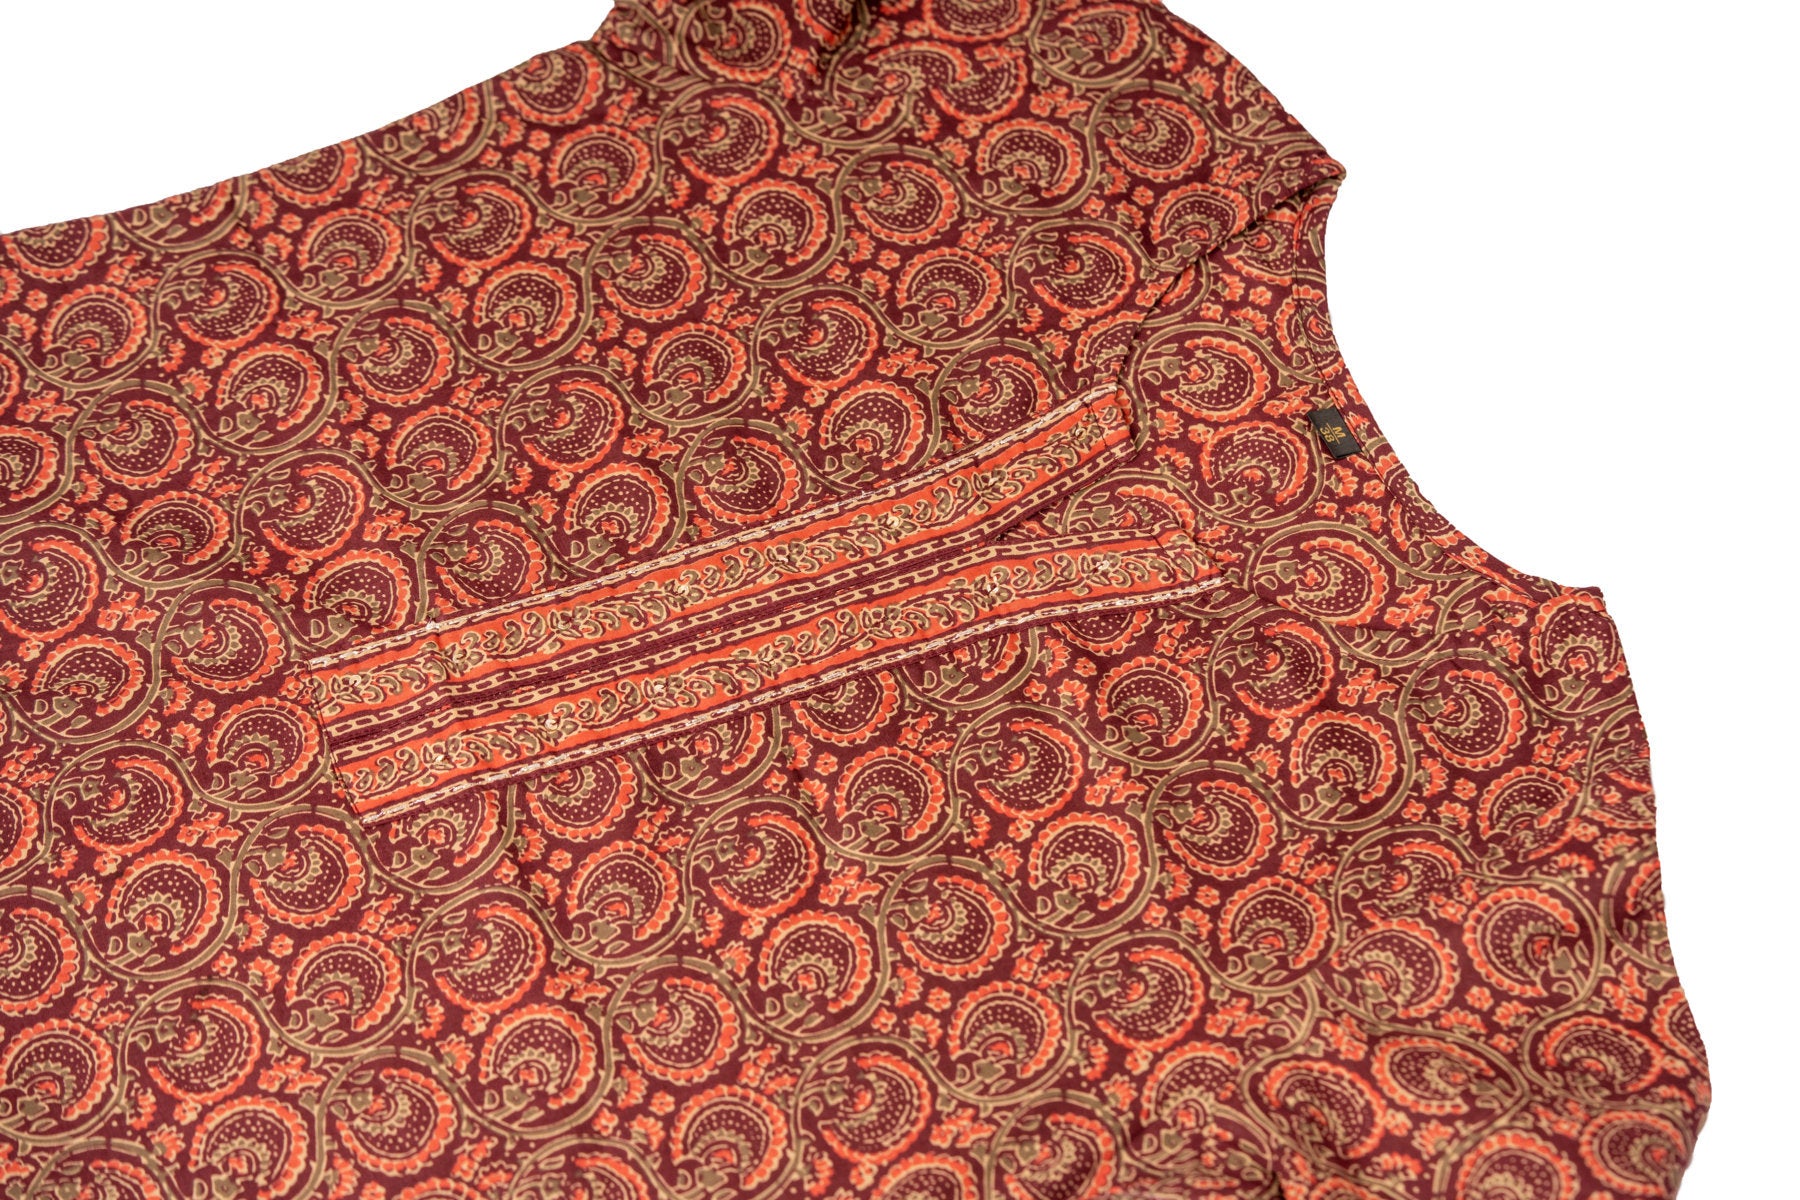 3 Piece Salwar - 100% Cotton maroon salwar in block printed design with crochet work at the bottom. Magenta 2 metre long dupatta with edge design matching the salwar.